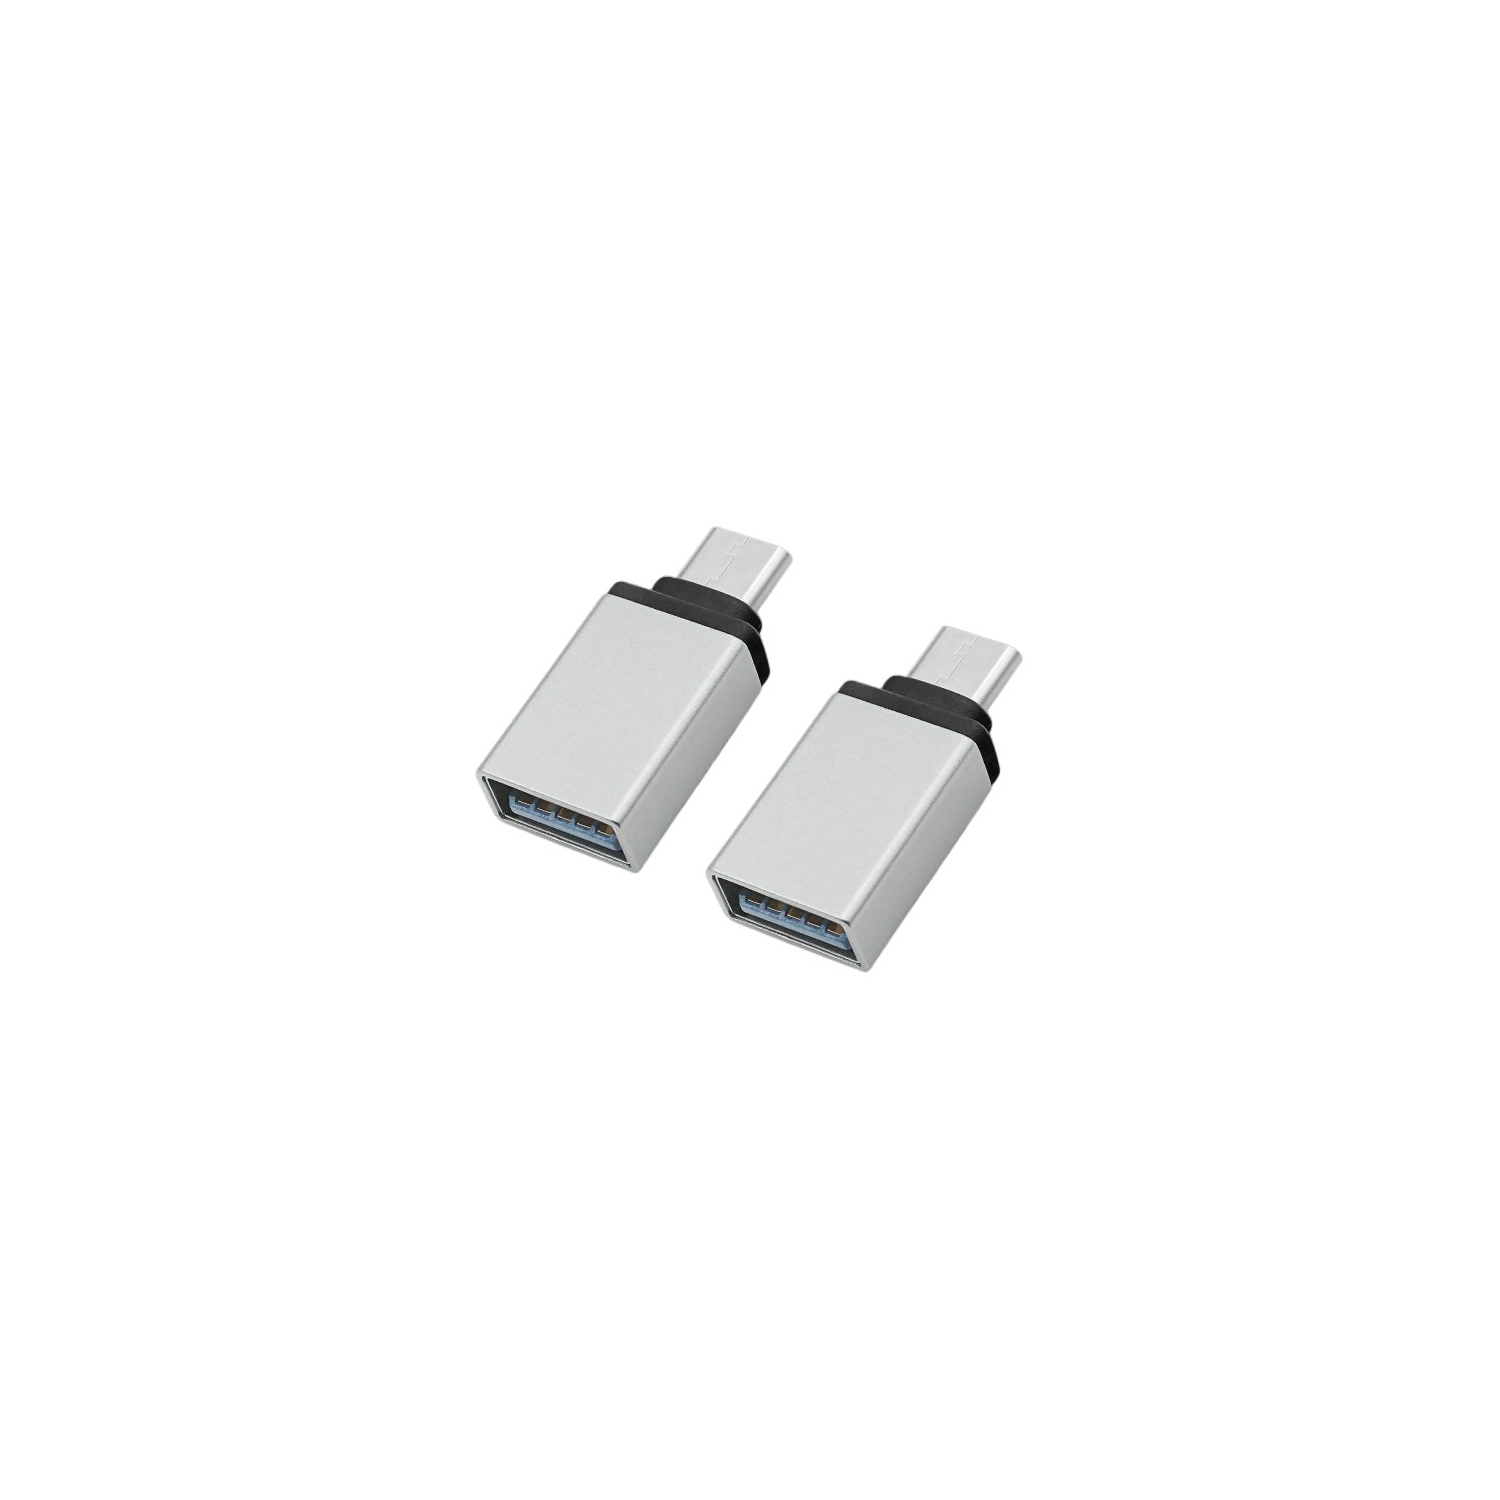 USB C to USB Adapter (2-Pack), USB C Male to USB 3.0 Female Type C Thunderbolt 4/3 OTG Converter for MacBook Pro 2023, iMac iPad Mini 6/Pro, Samsung Galaxy S23 S22 S21 S20